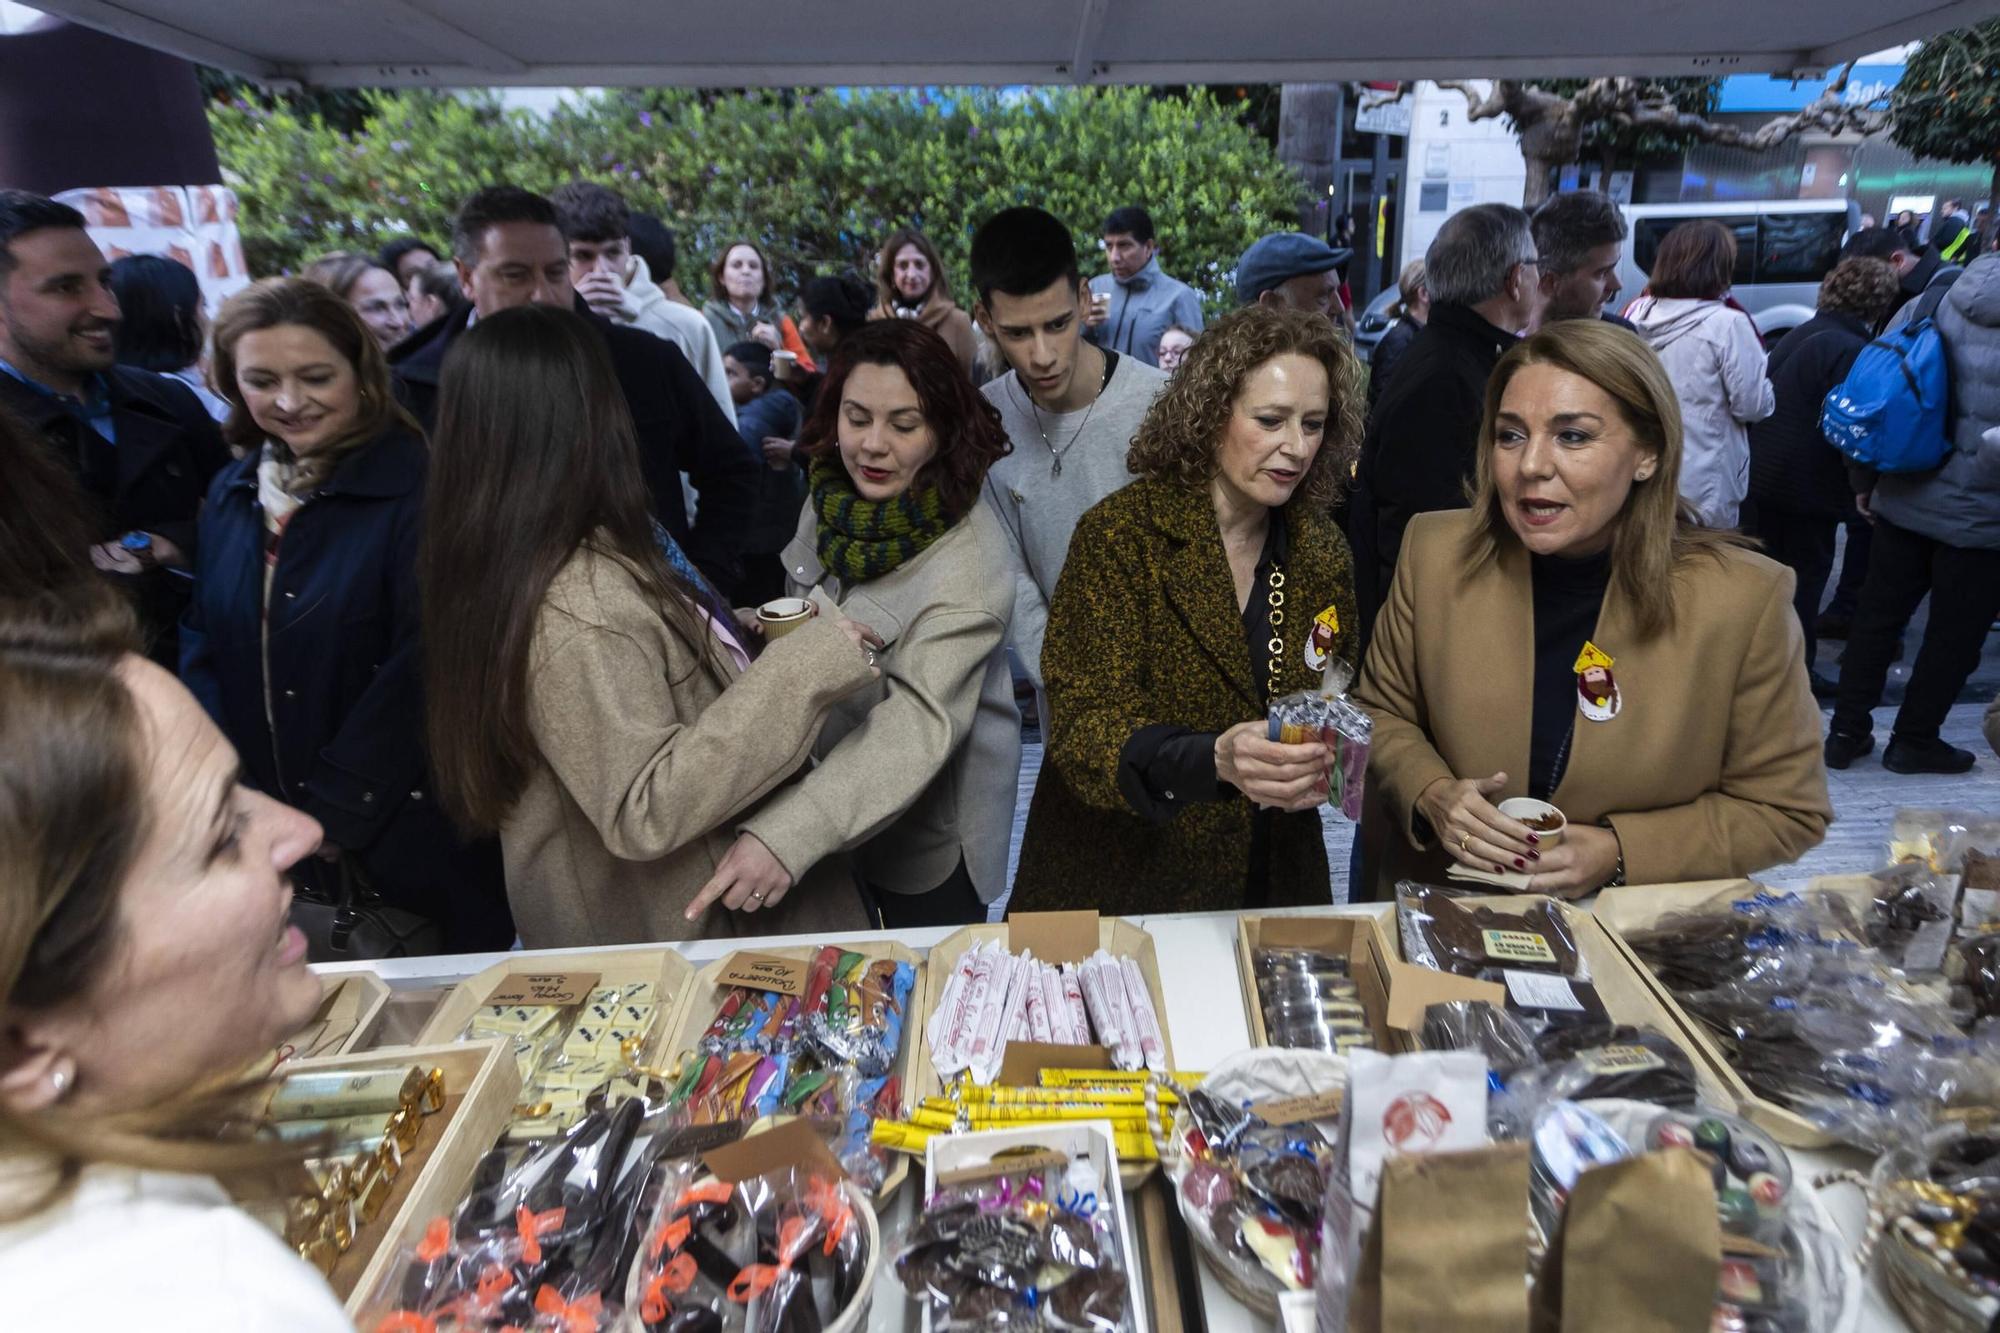 La Feria del Chocolate de Torrent atrae a cientos de amantes del dulce